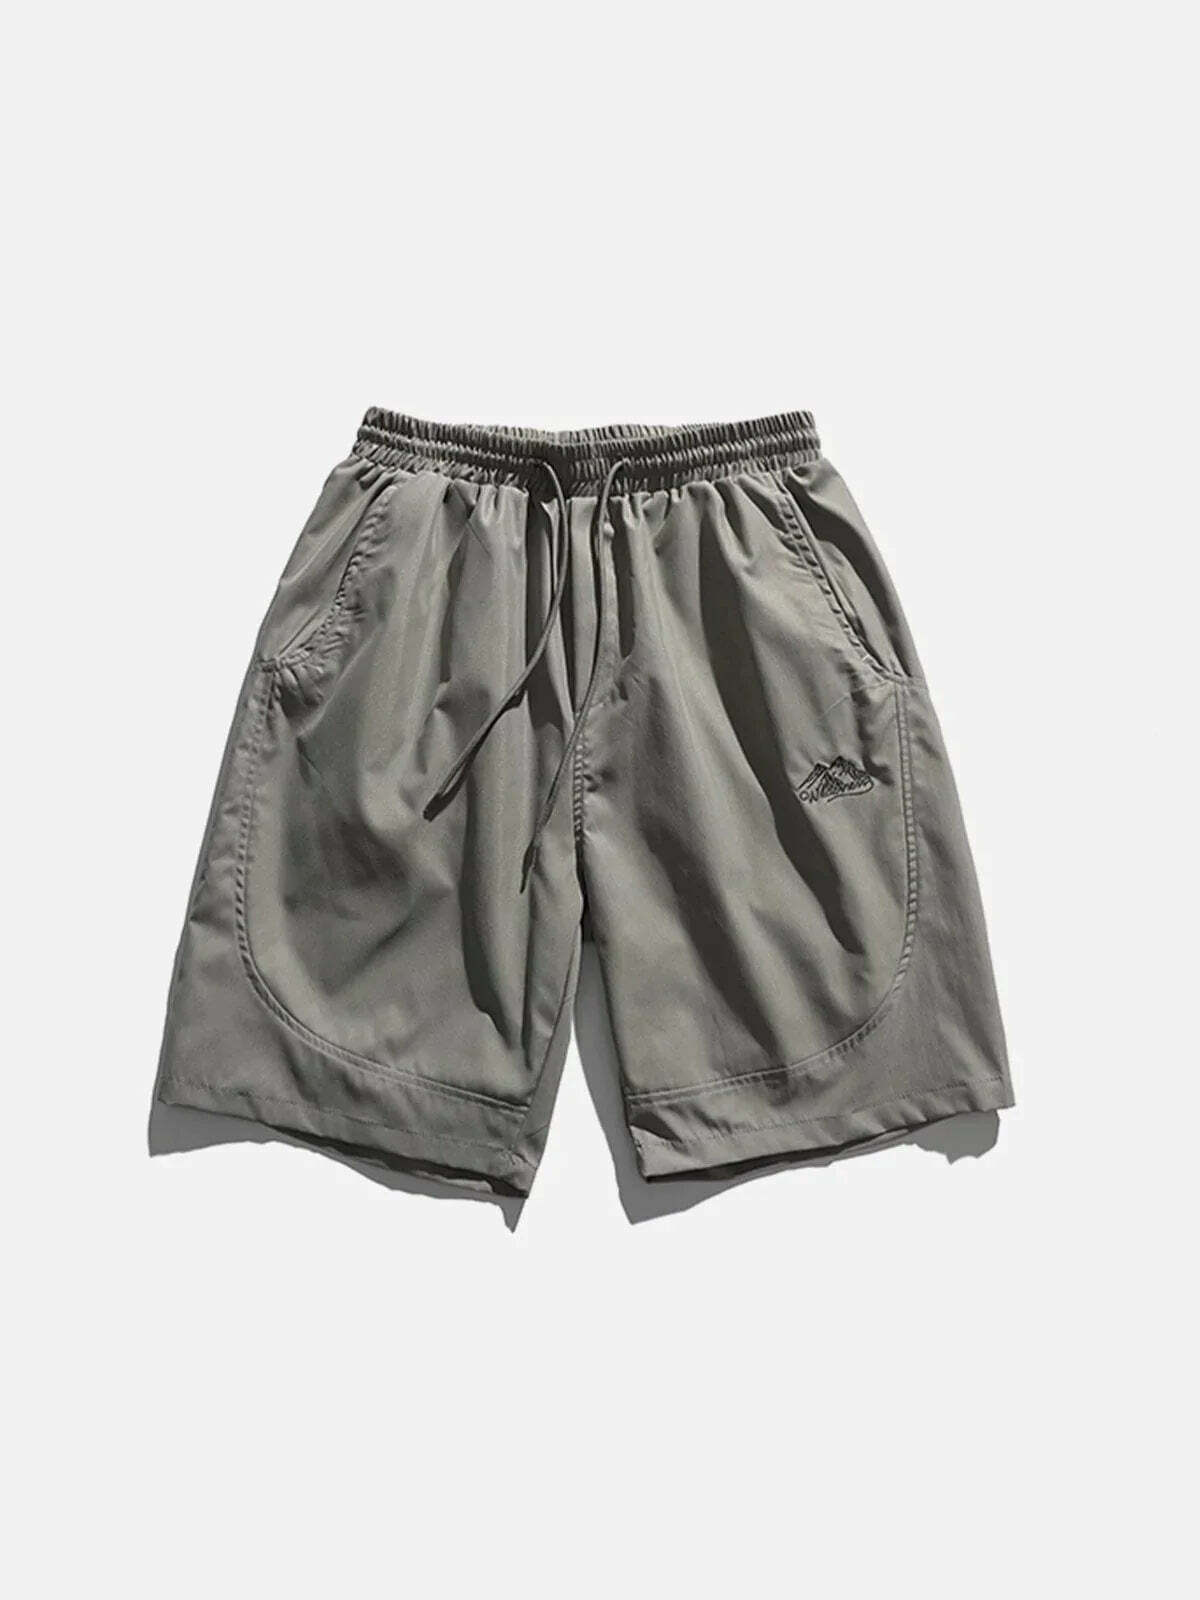 vintage mountain shorts retro outdoor adventure wear 1272